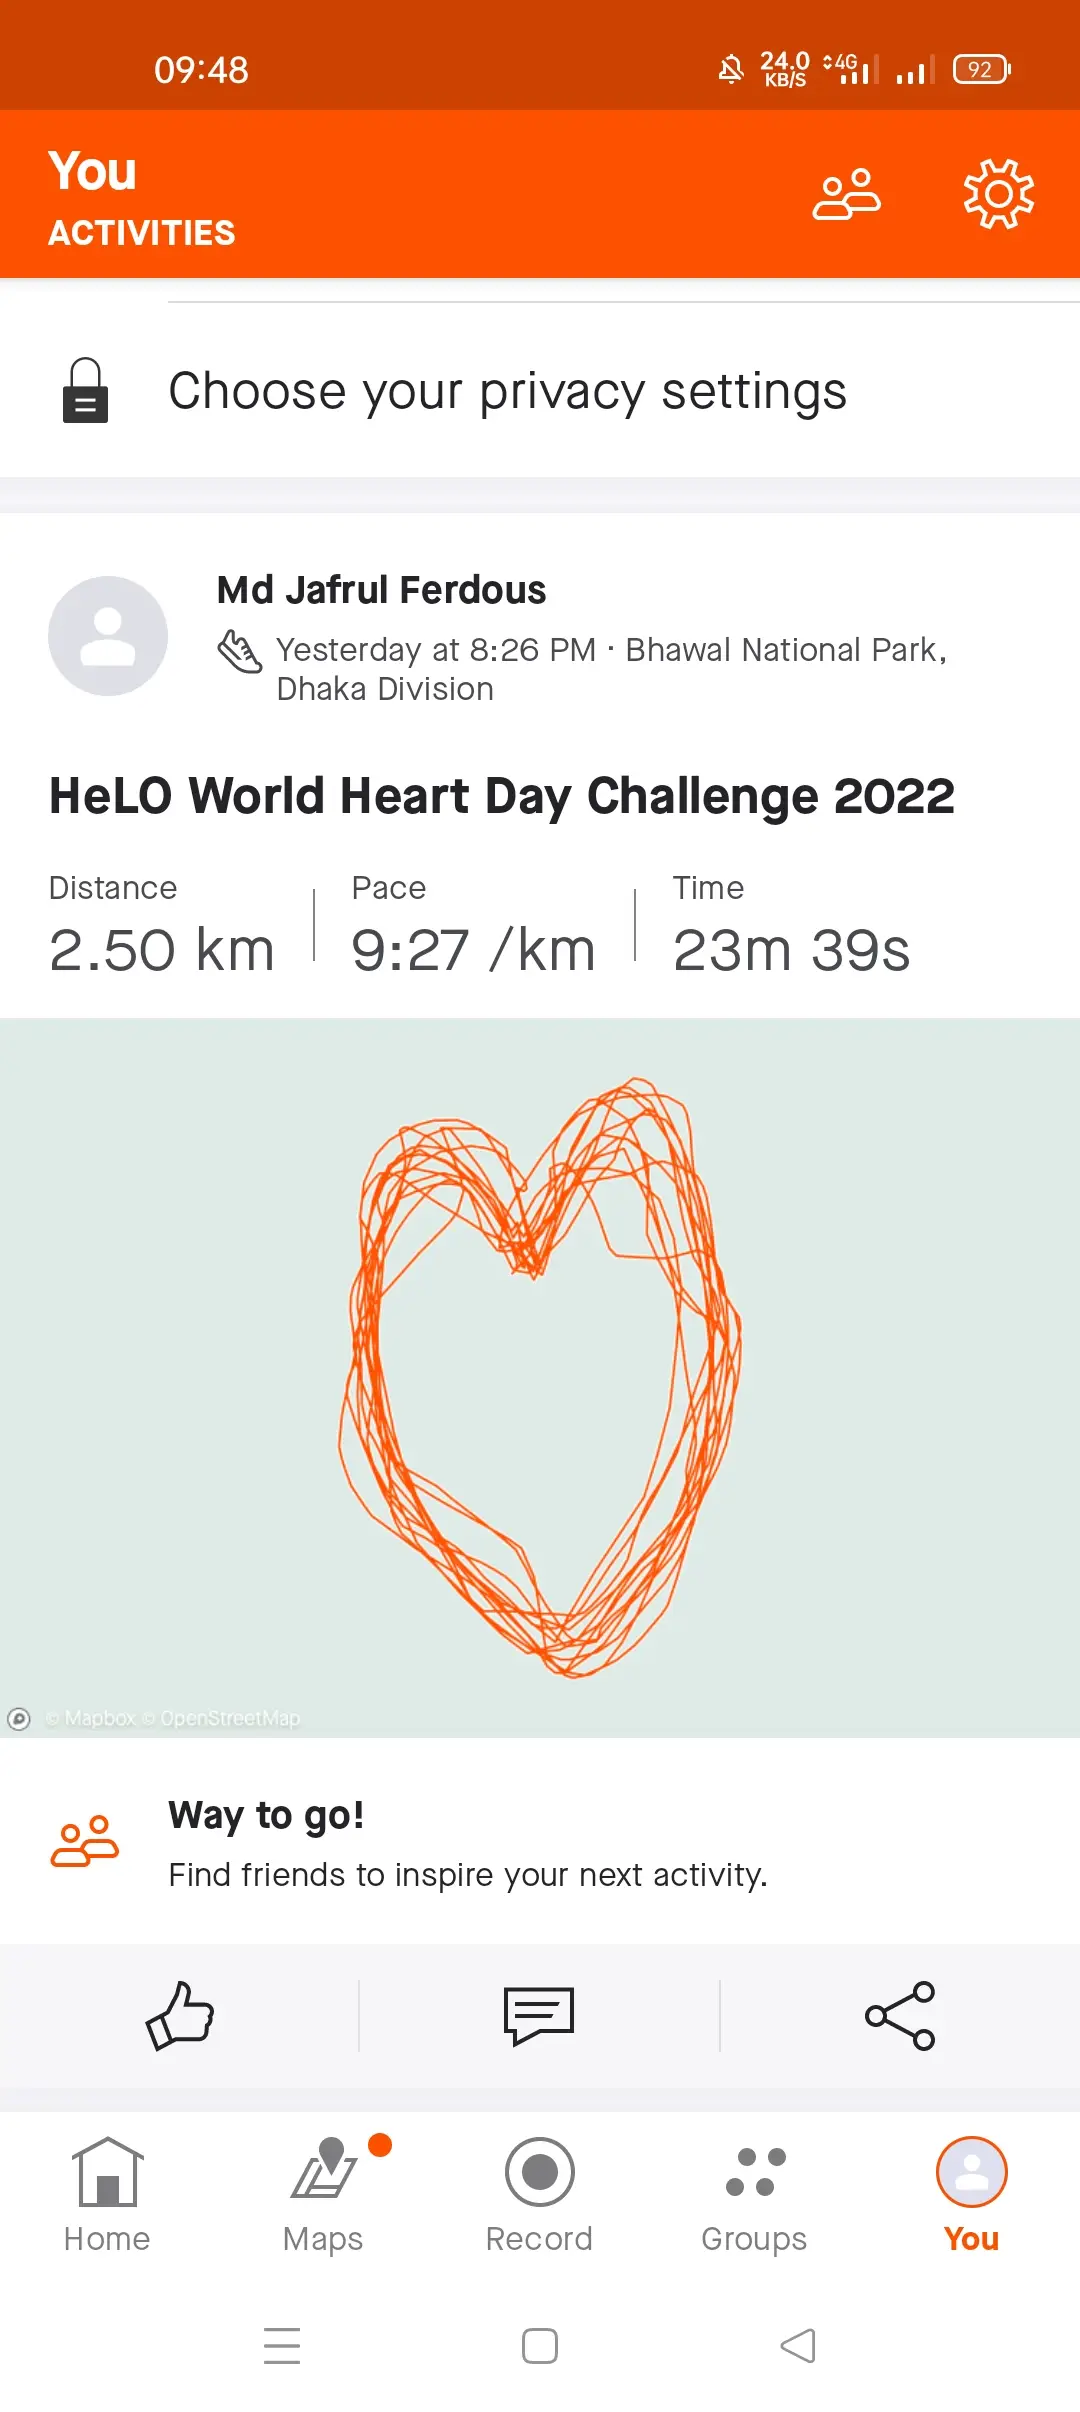 HeLO World Heart Day Challenge 2022